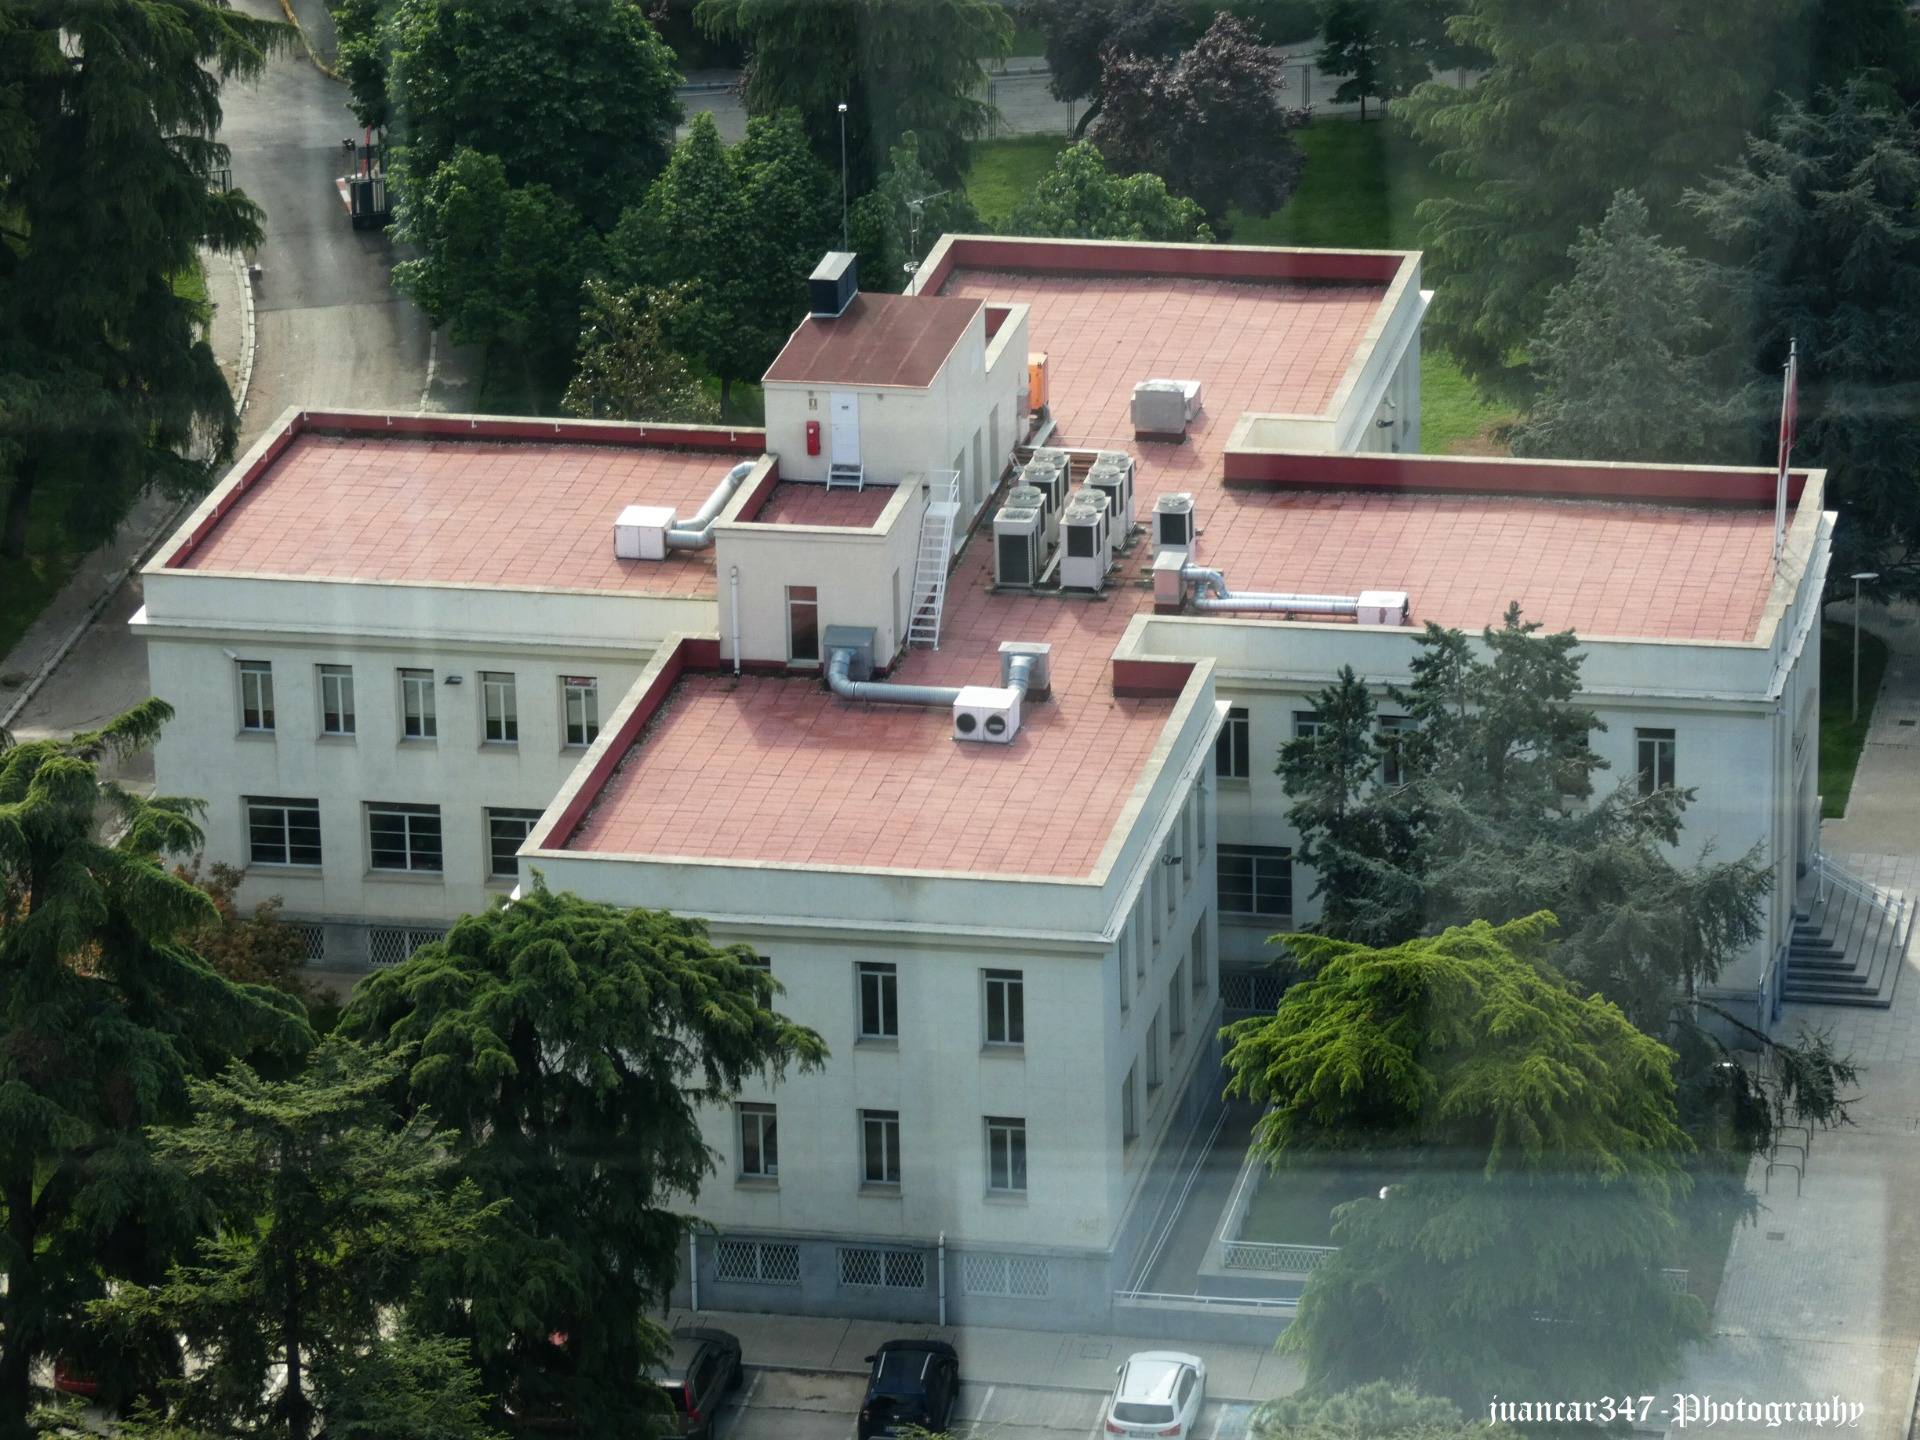 Part of the facilities of the Jiménez Díaz Foundation (La Concepción), a building with a plan in the shape of a Greek cross